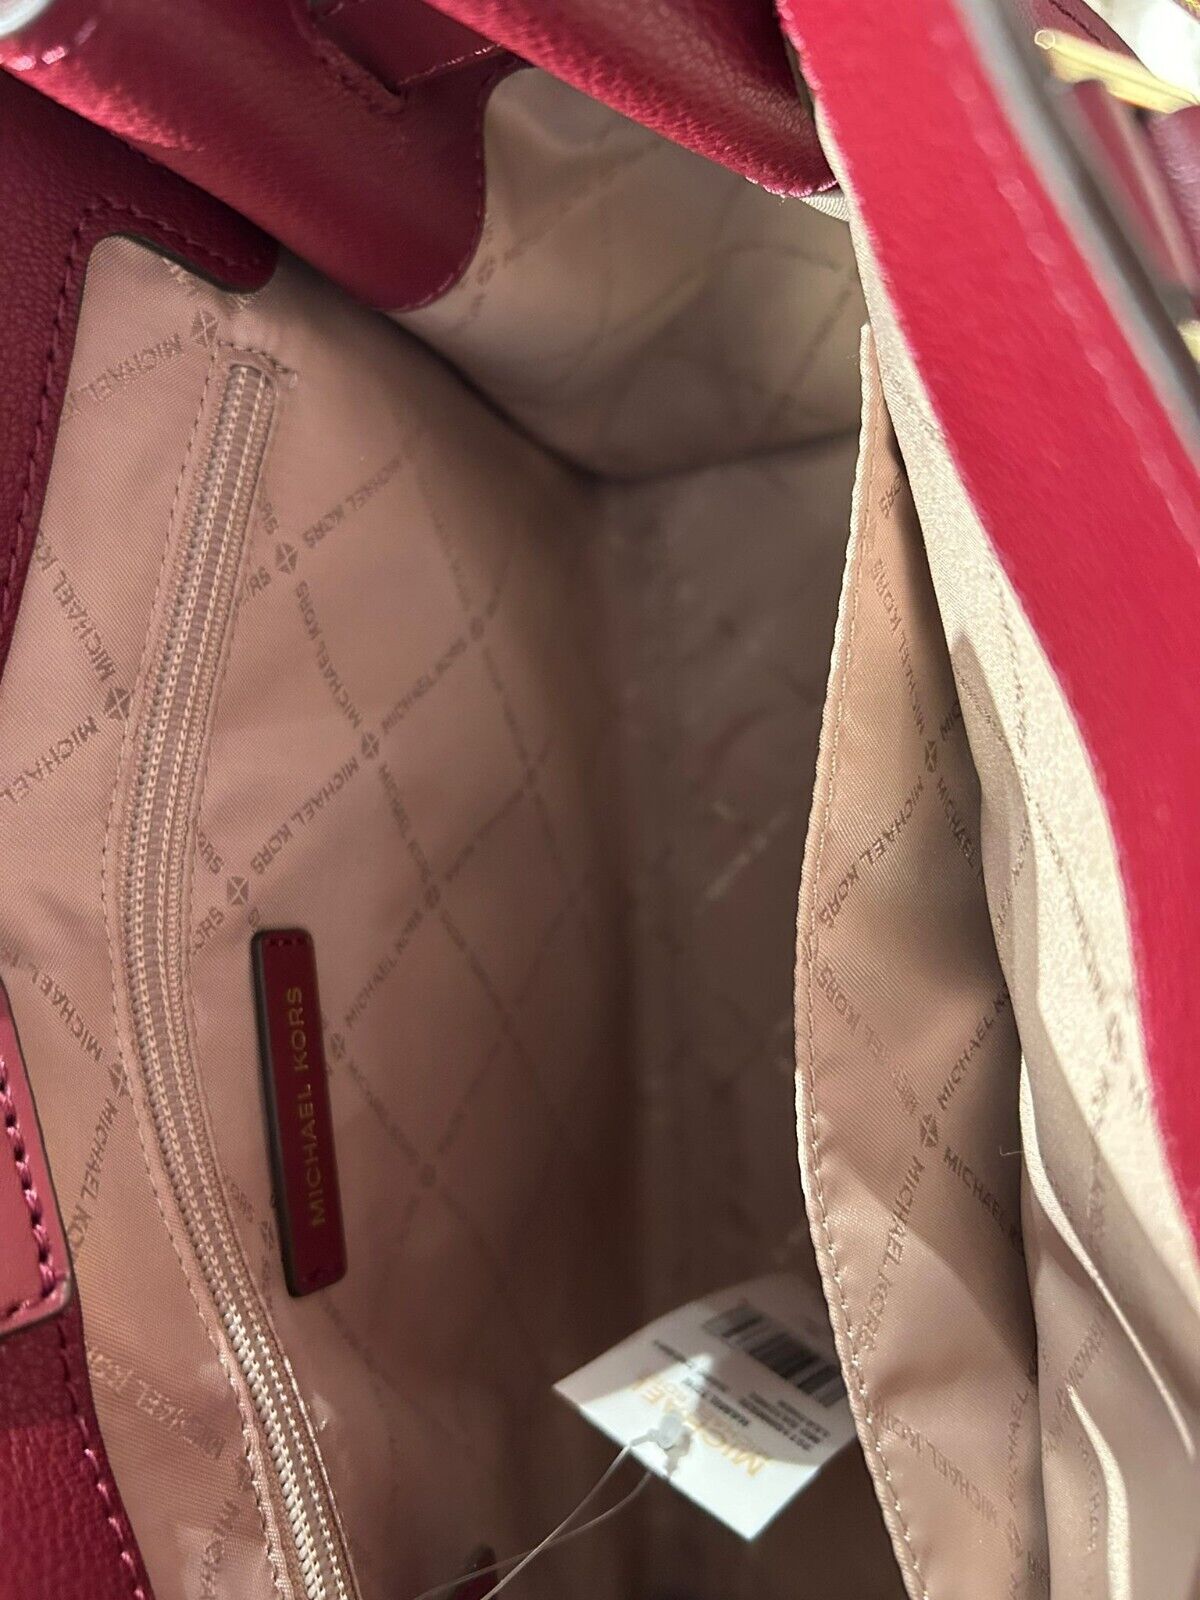 Michael Kors Hamilton Medium Satchel Leather Shoulder Bag Handbag in Dark  Cherry